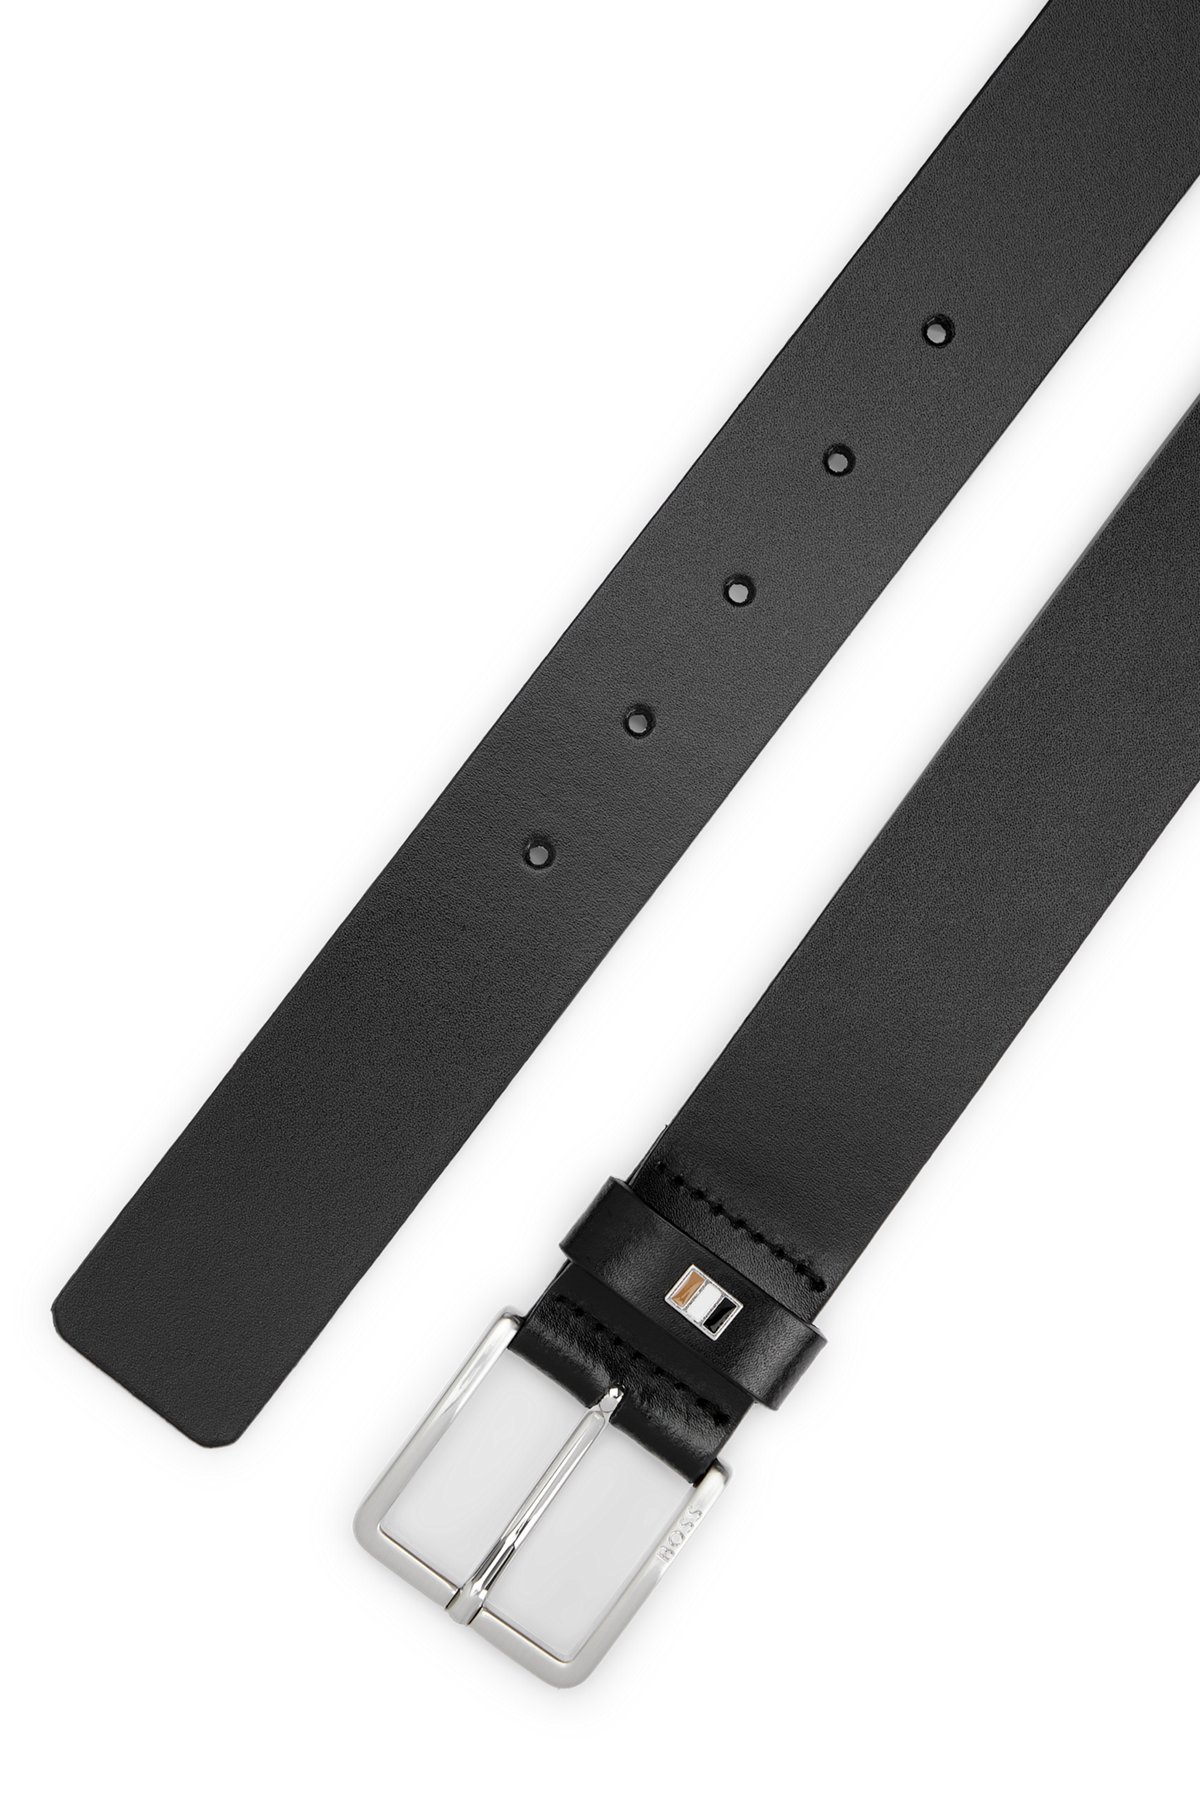 BOSS - Italian-leather belt with signature-stripe hardware